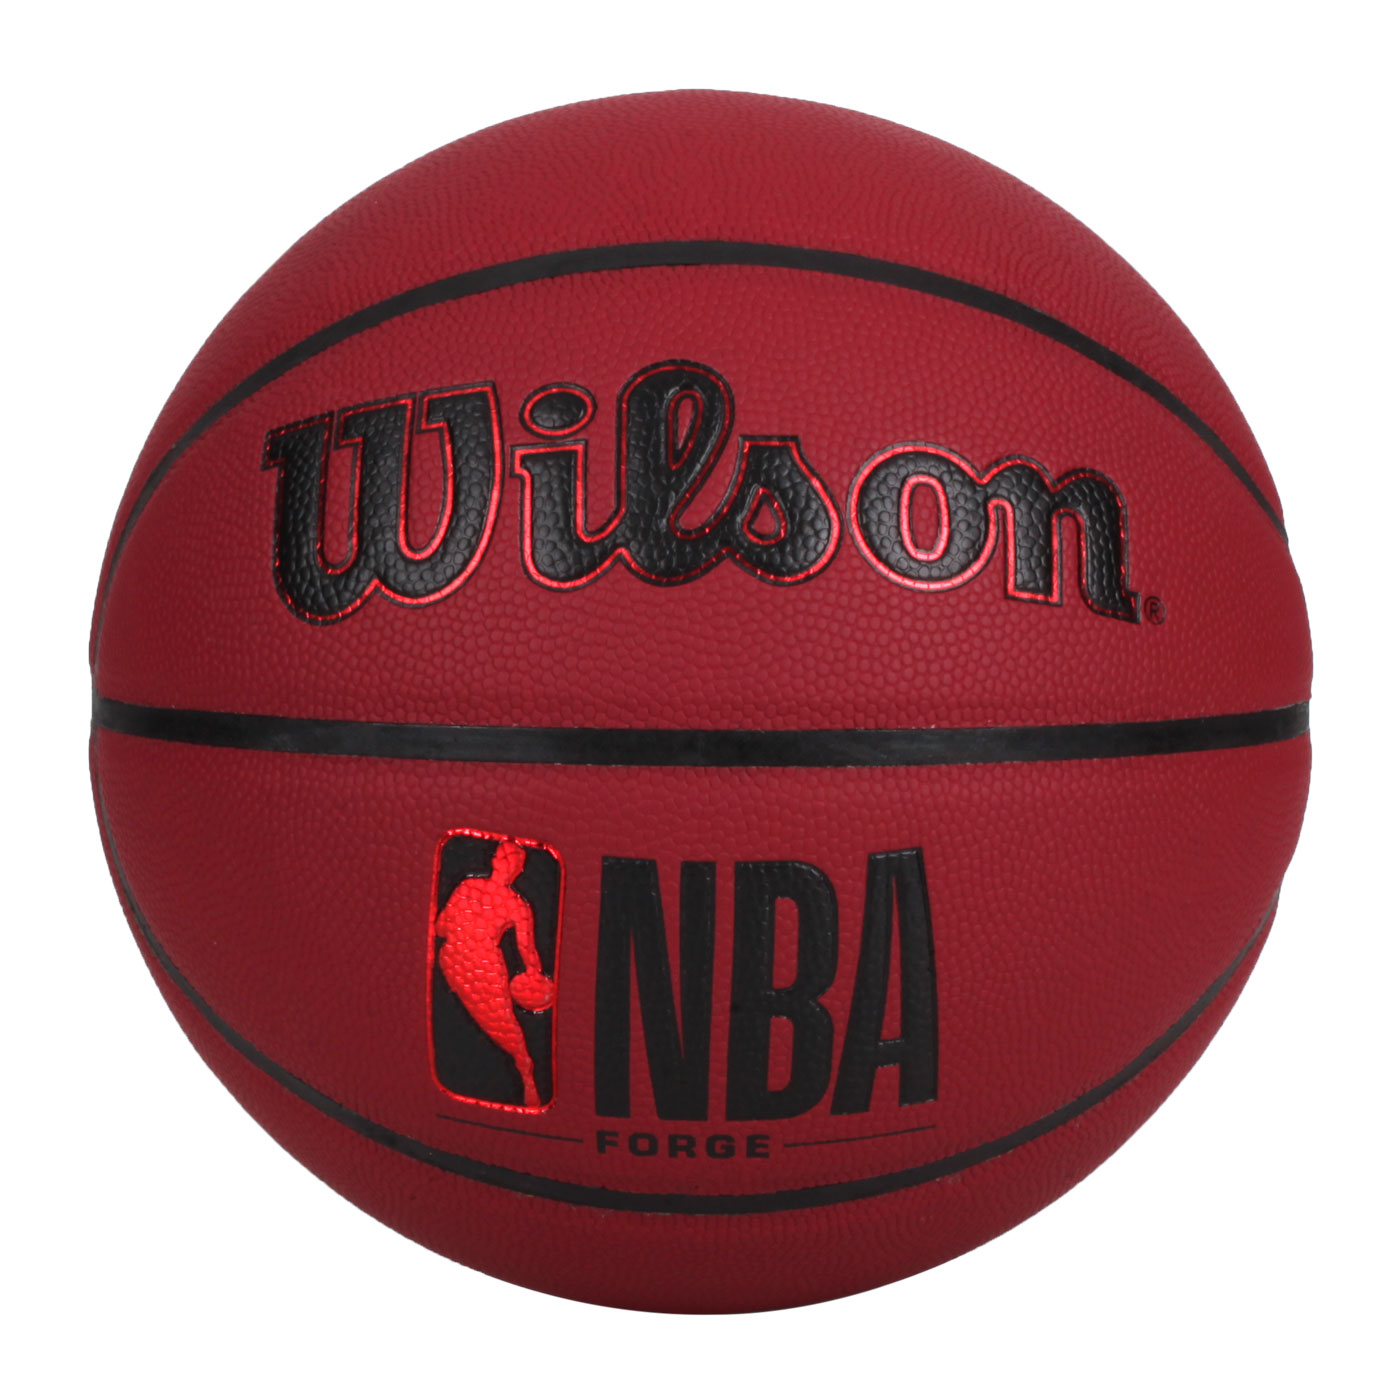 WILSON NBA FORGE系列 合成皮籃球#7 WTB8201XB07 - 酒紅黑